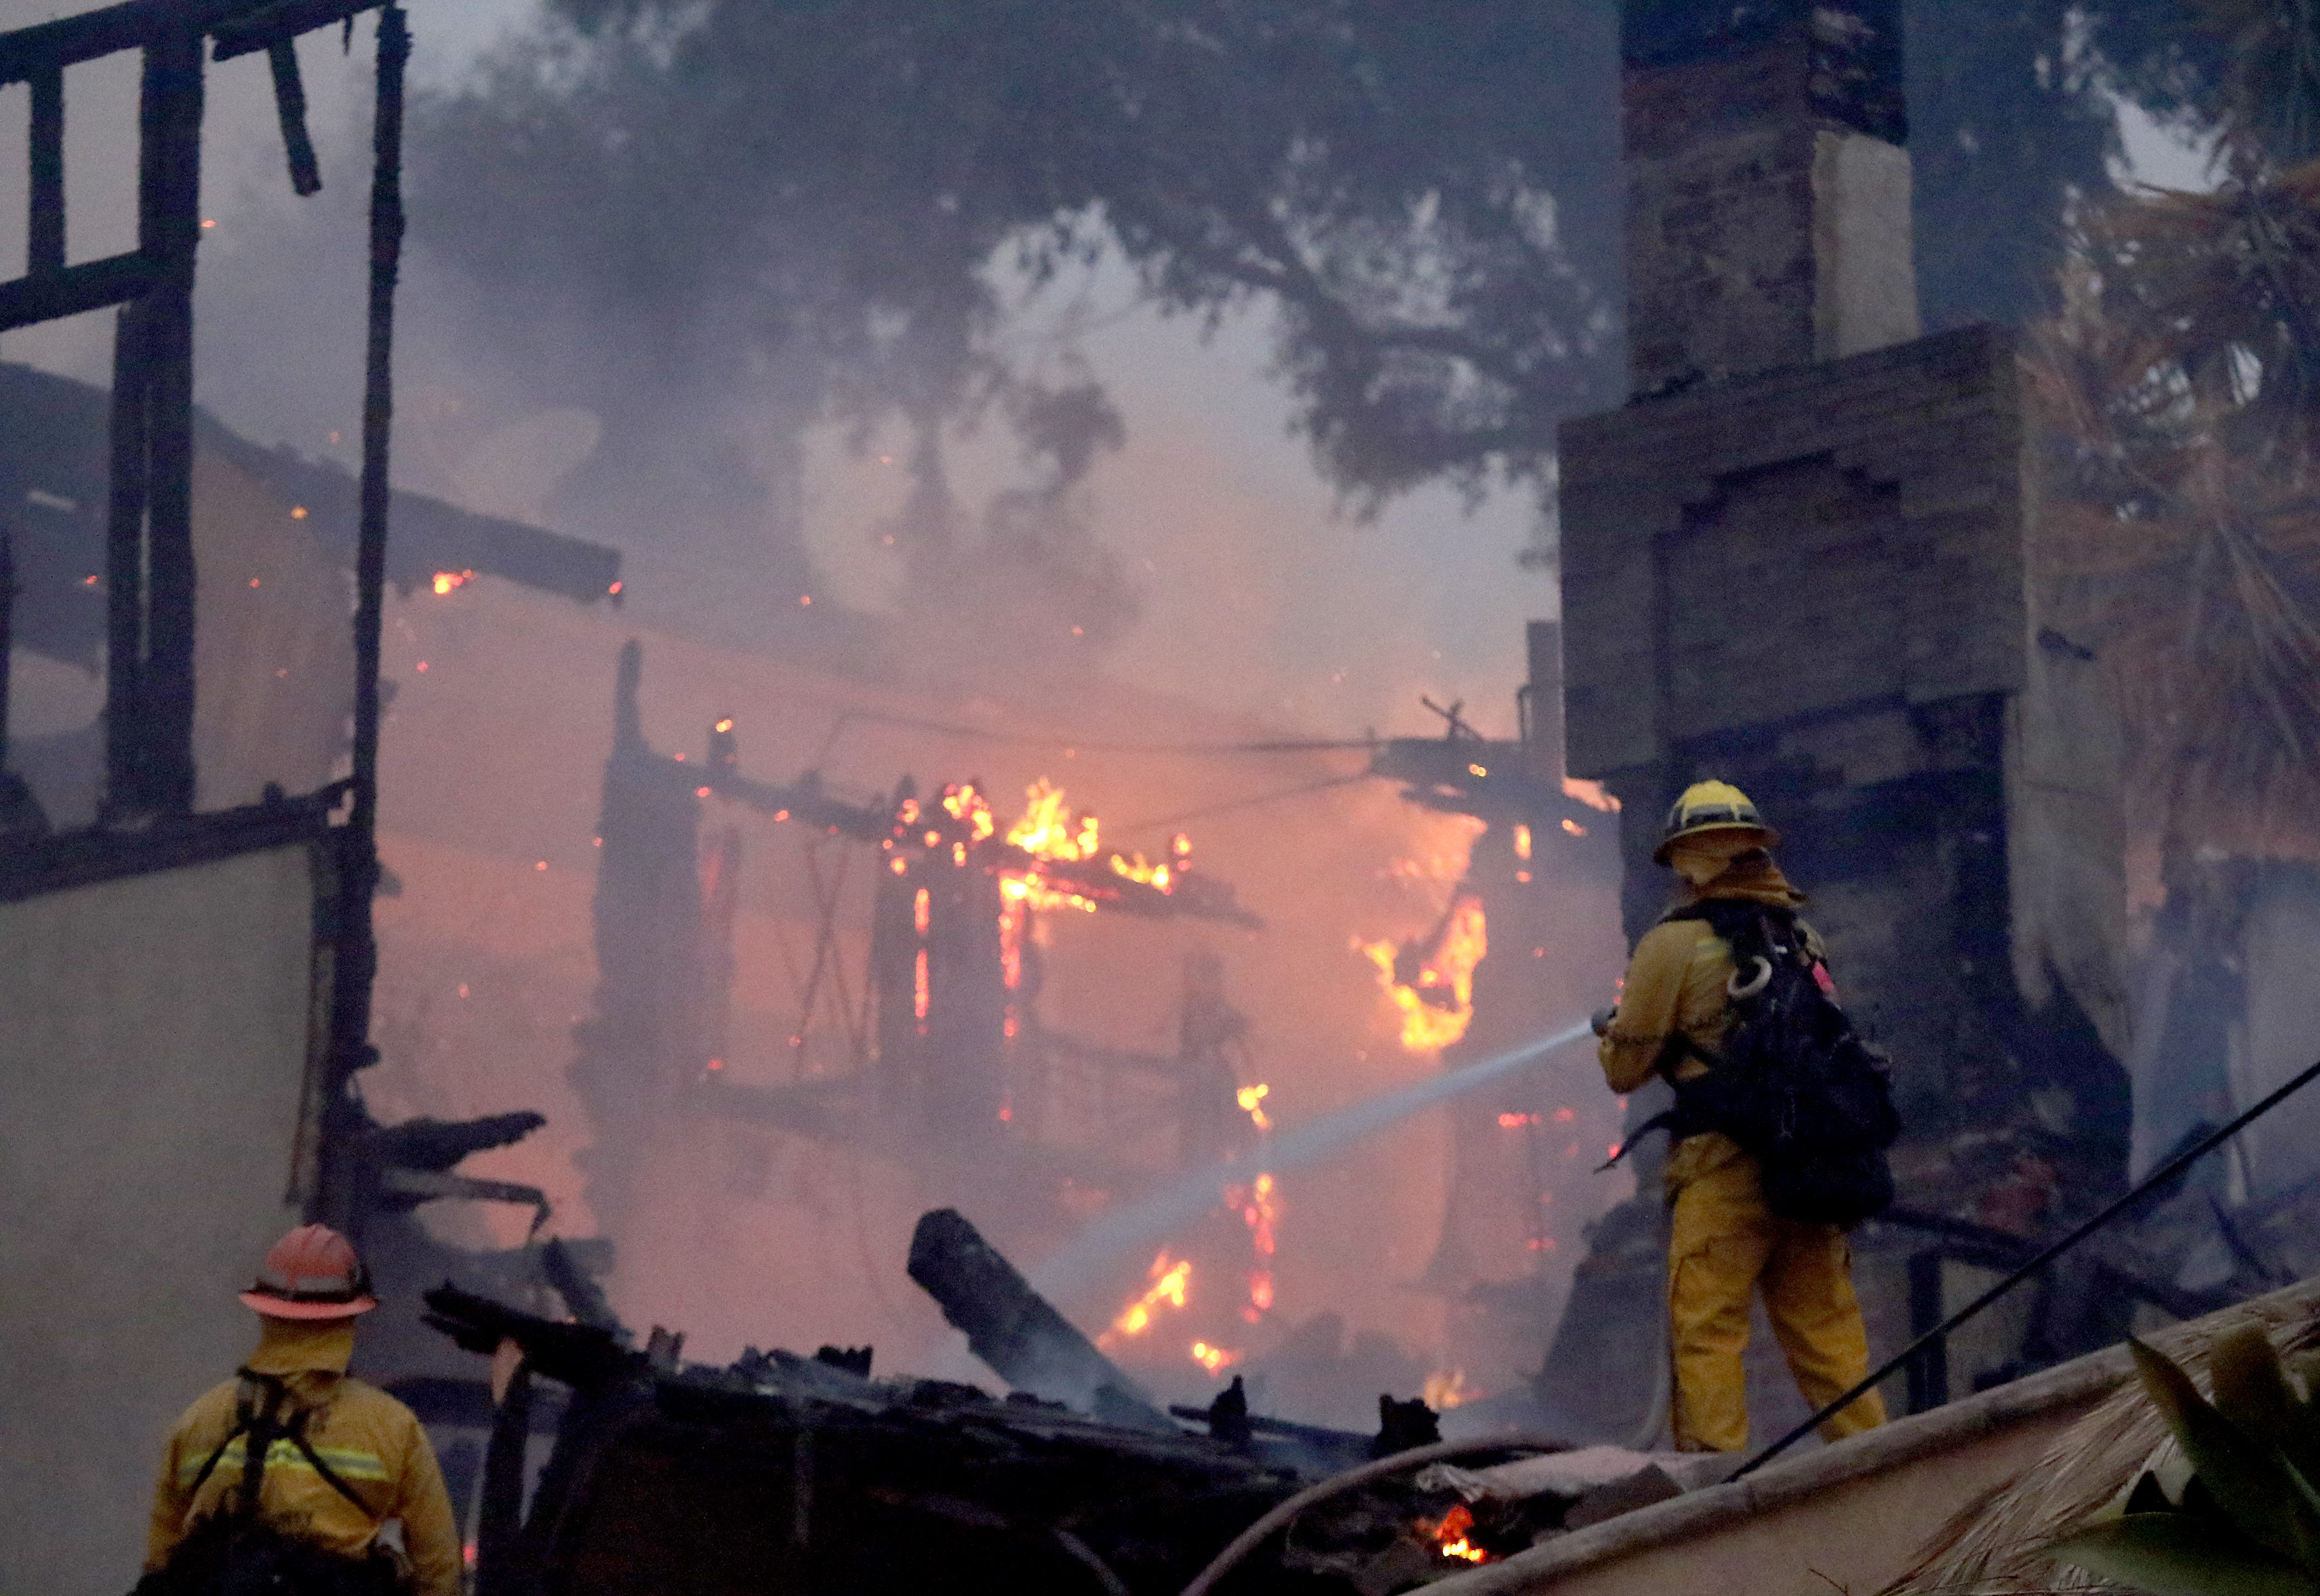 Thomas Fire burning near Ventura, thousands evacuated